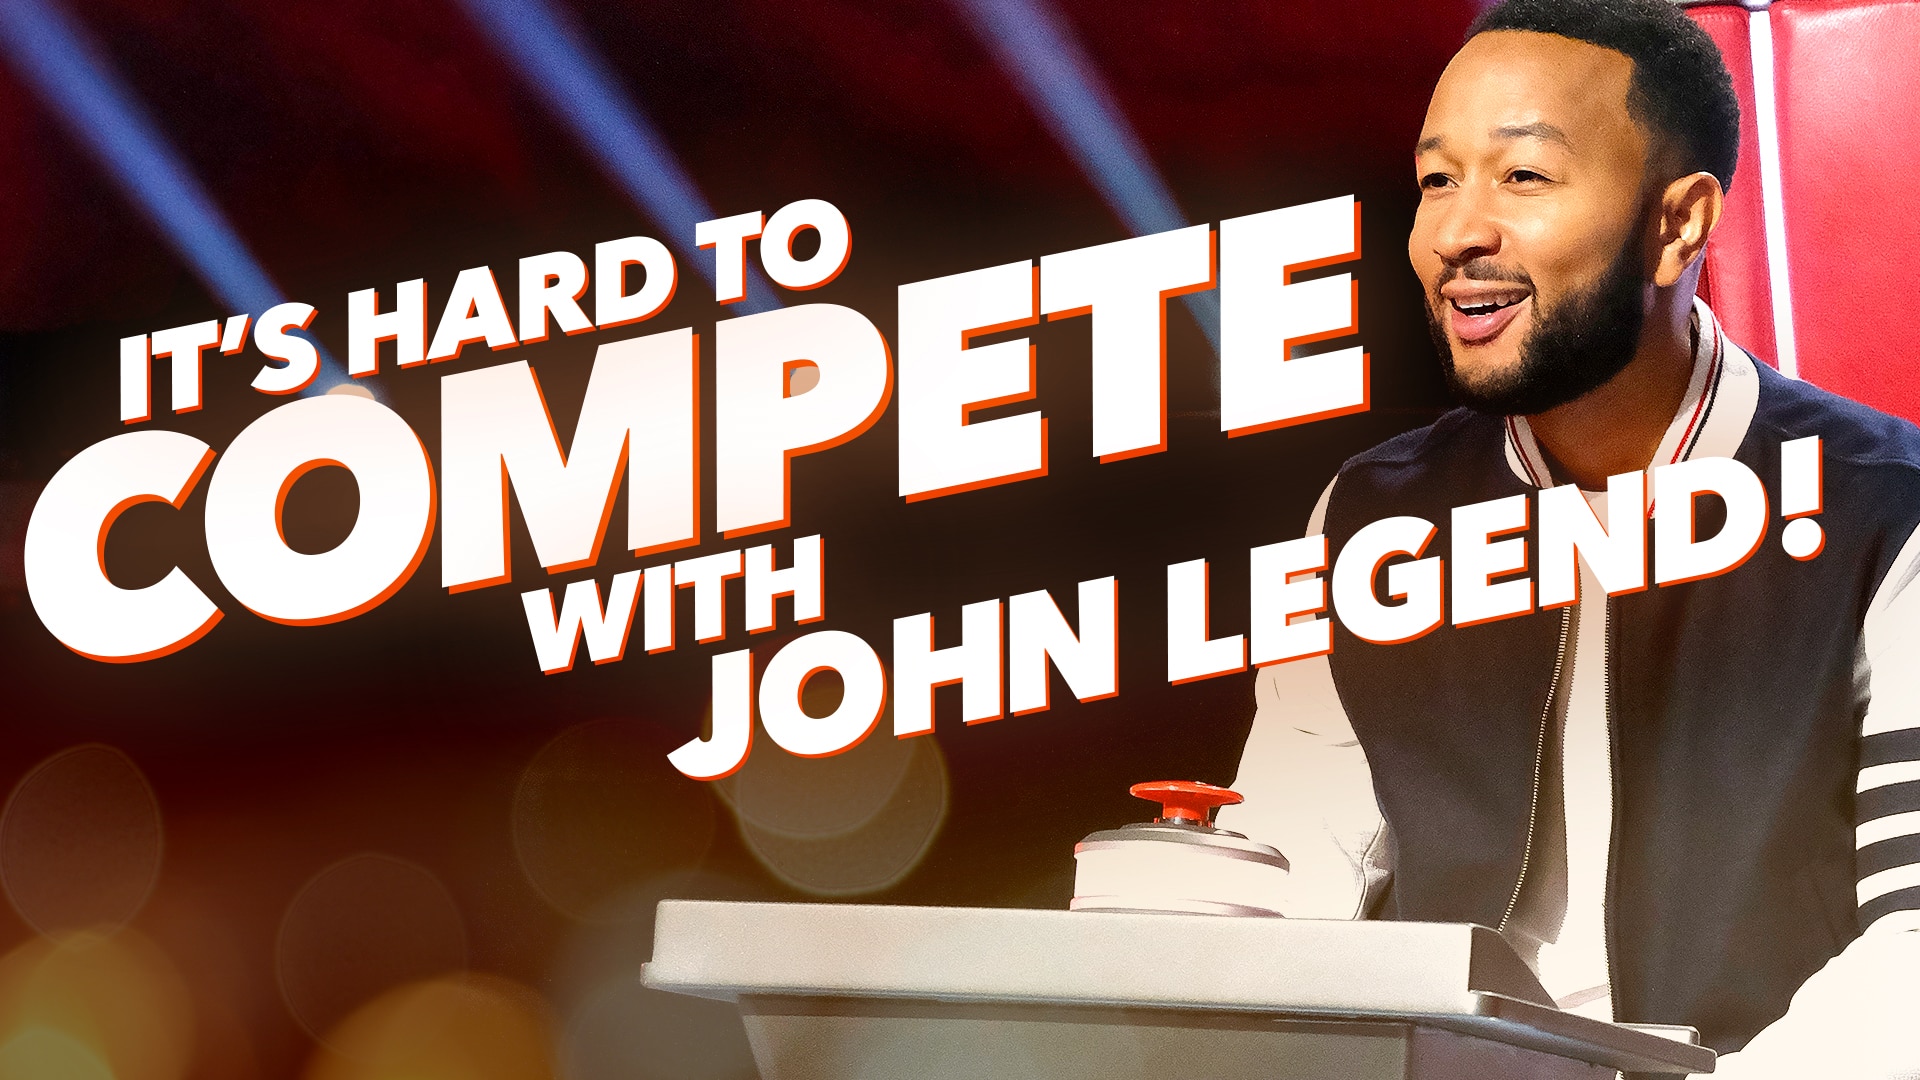 Watch The Voice Sneak Peek John Legend Woos New Artists to His Team